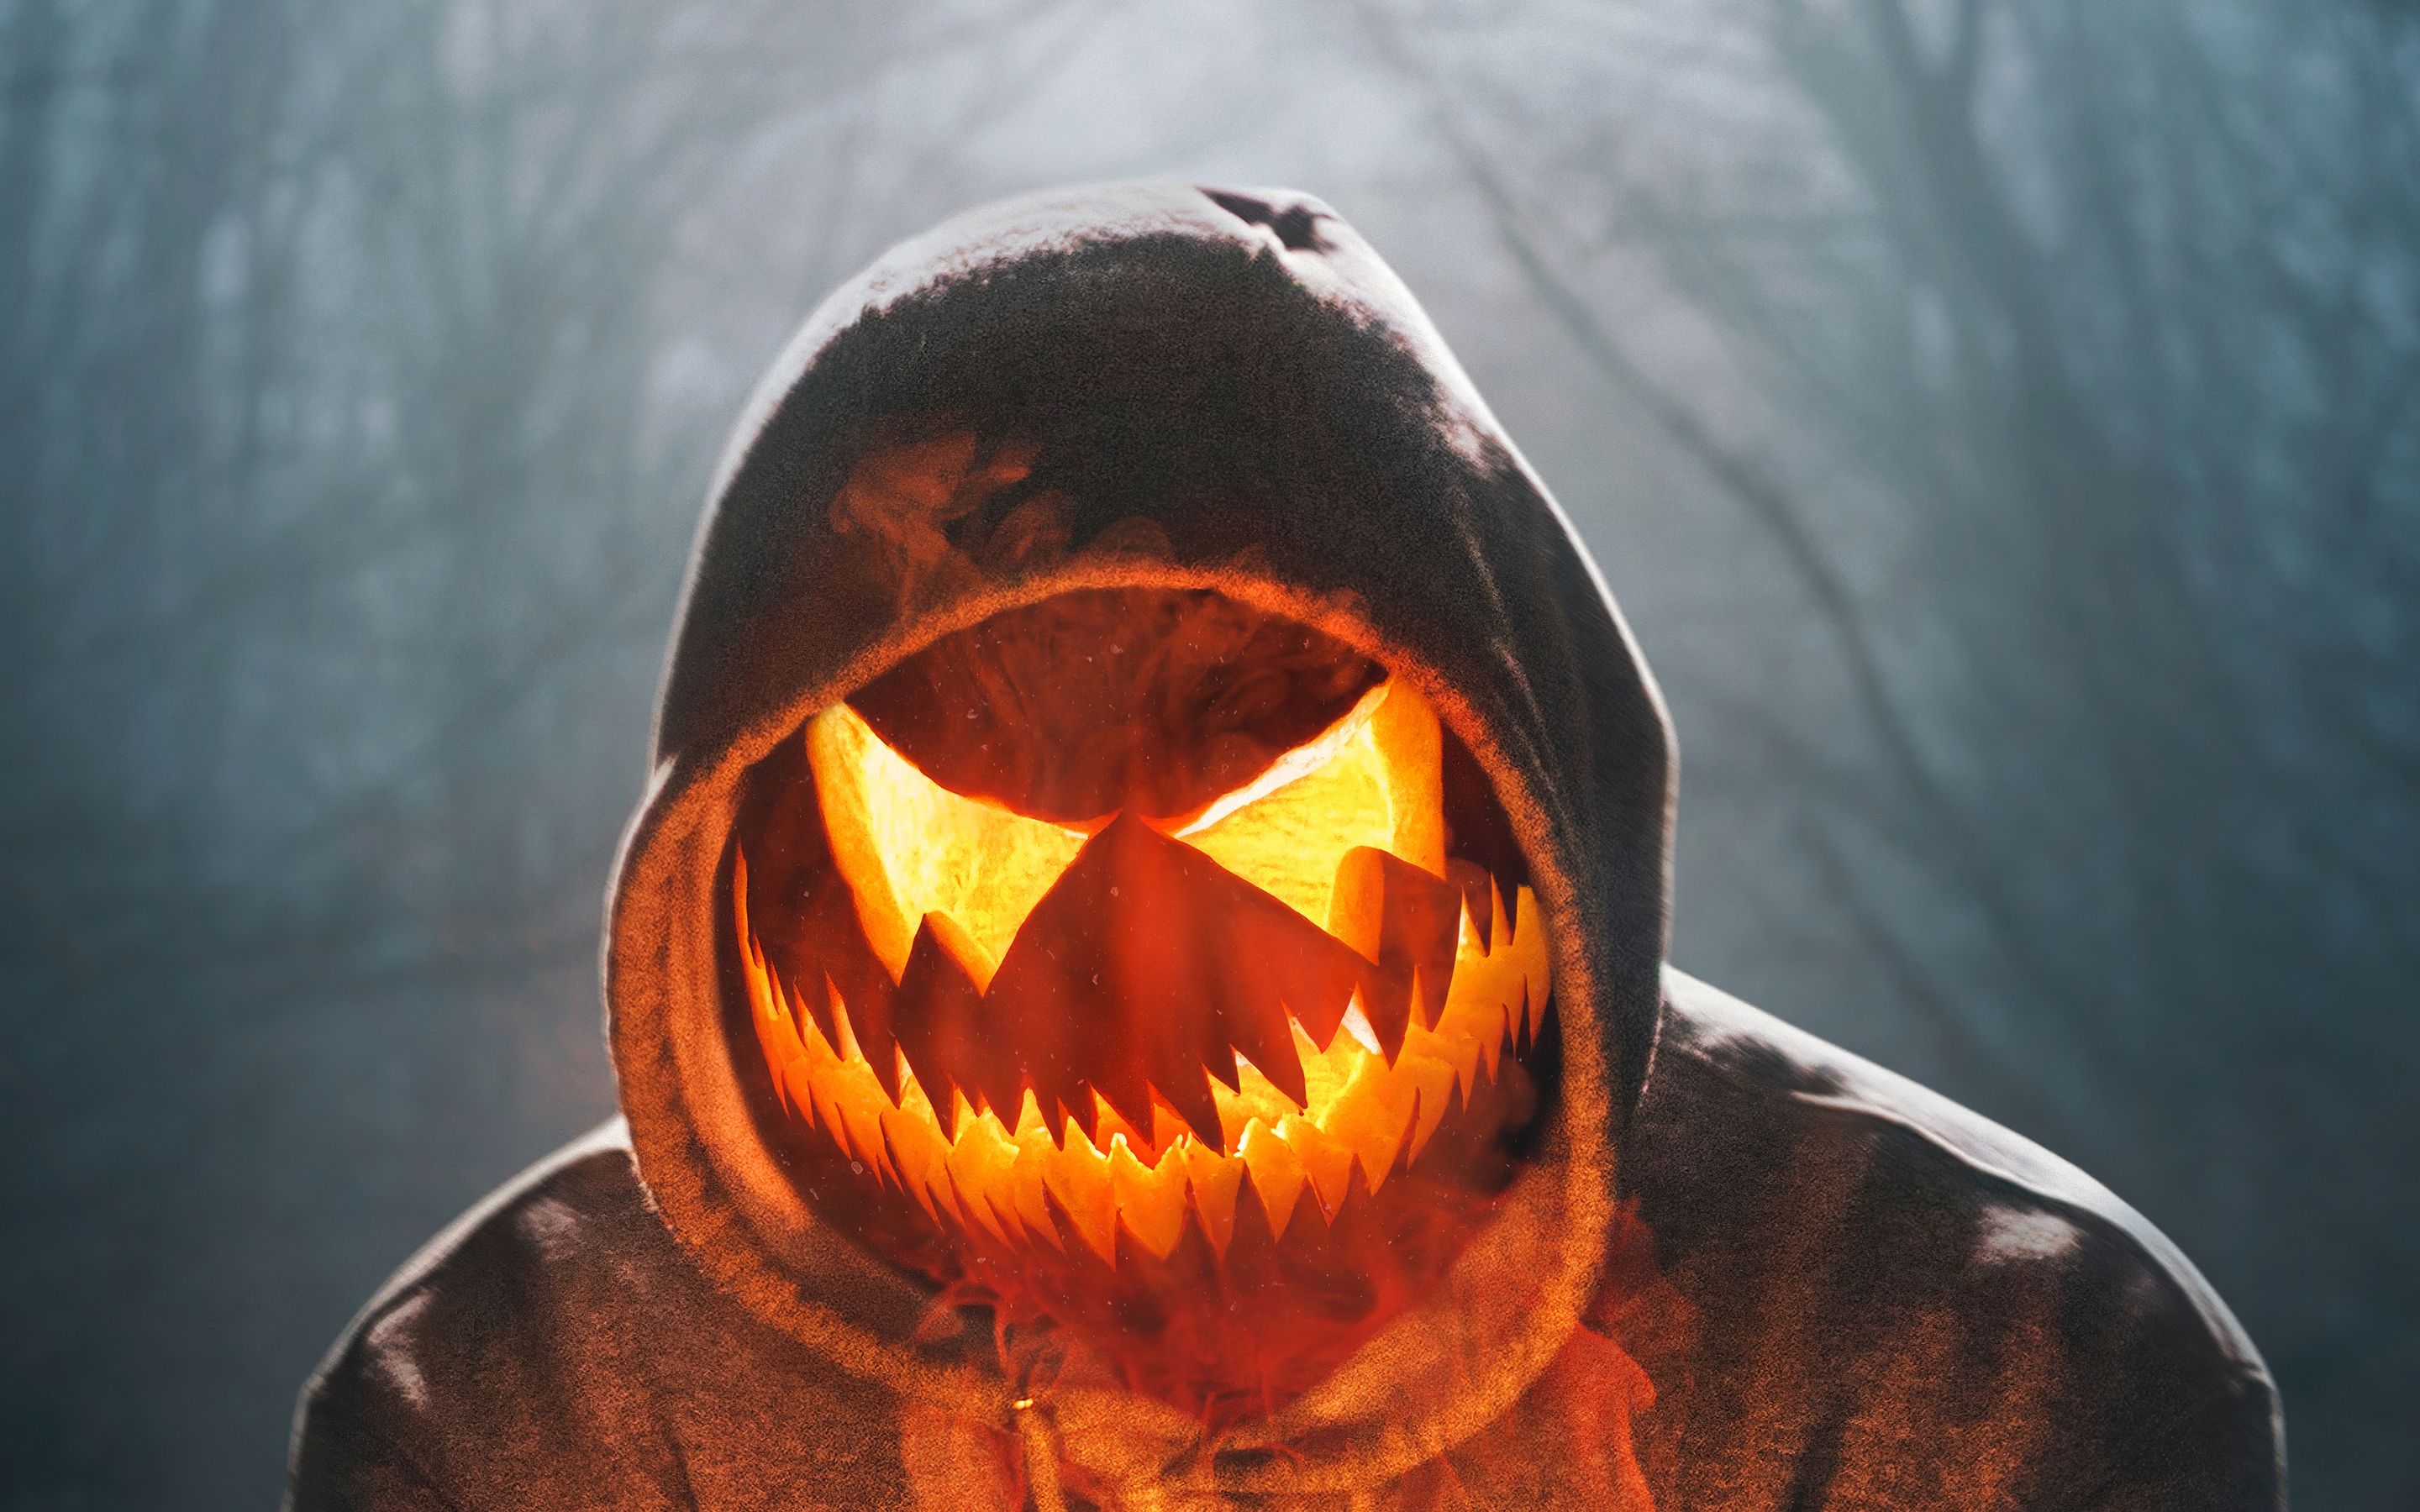 Halloween Mask Boy Glowing 4k Macbook Pro Retina HD 4k Wallpaper, Image, Background, Photo and Picture